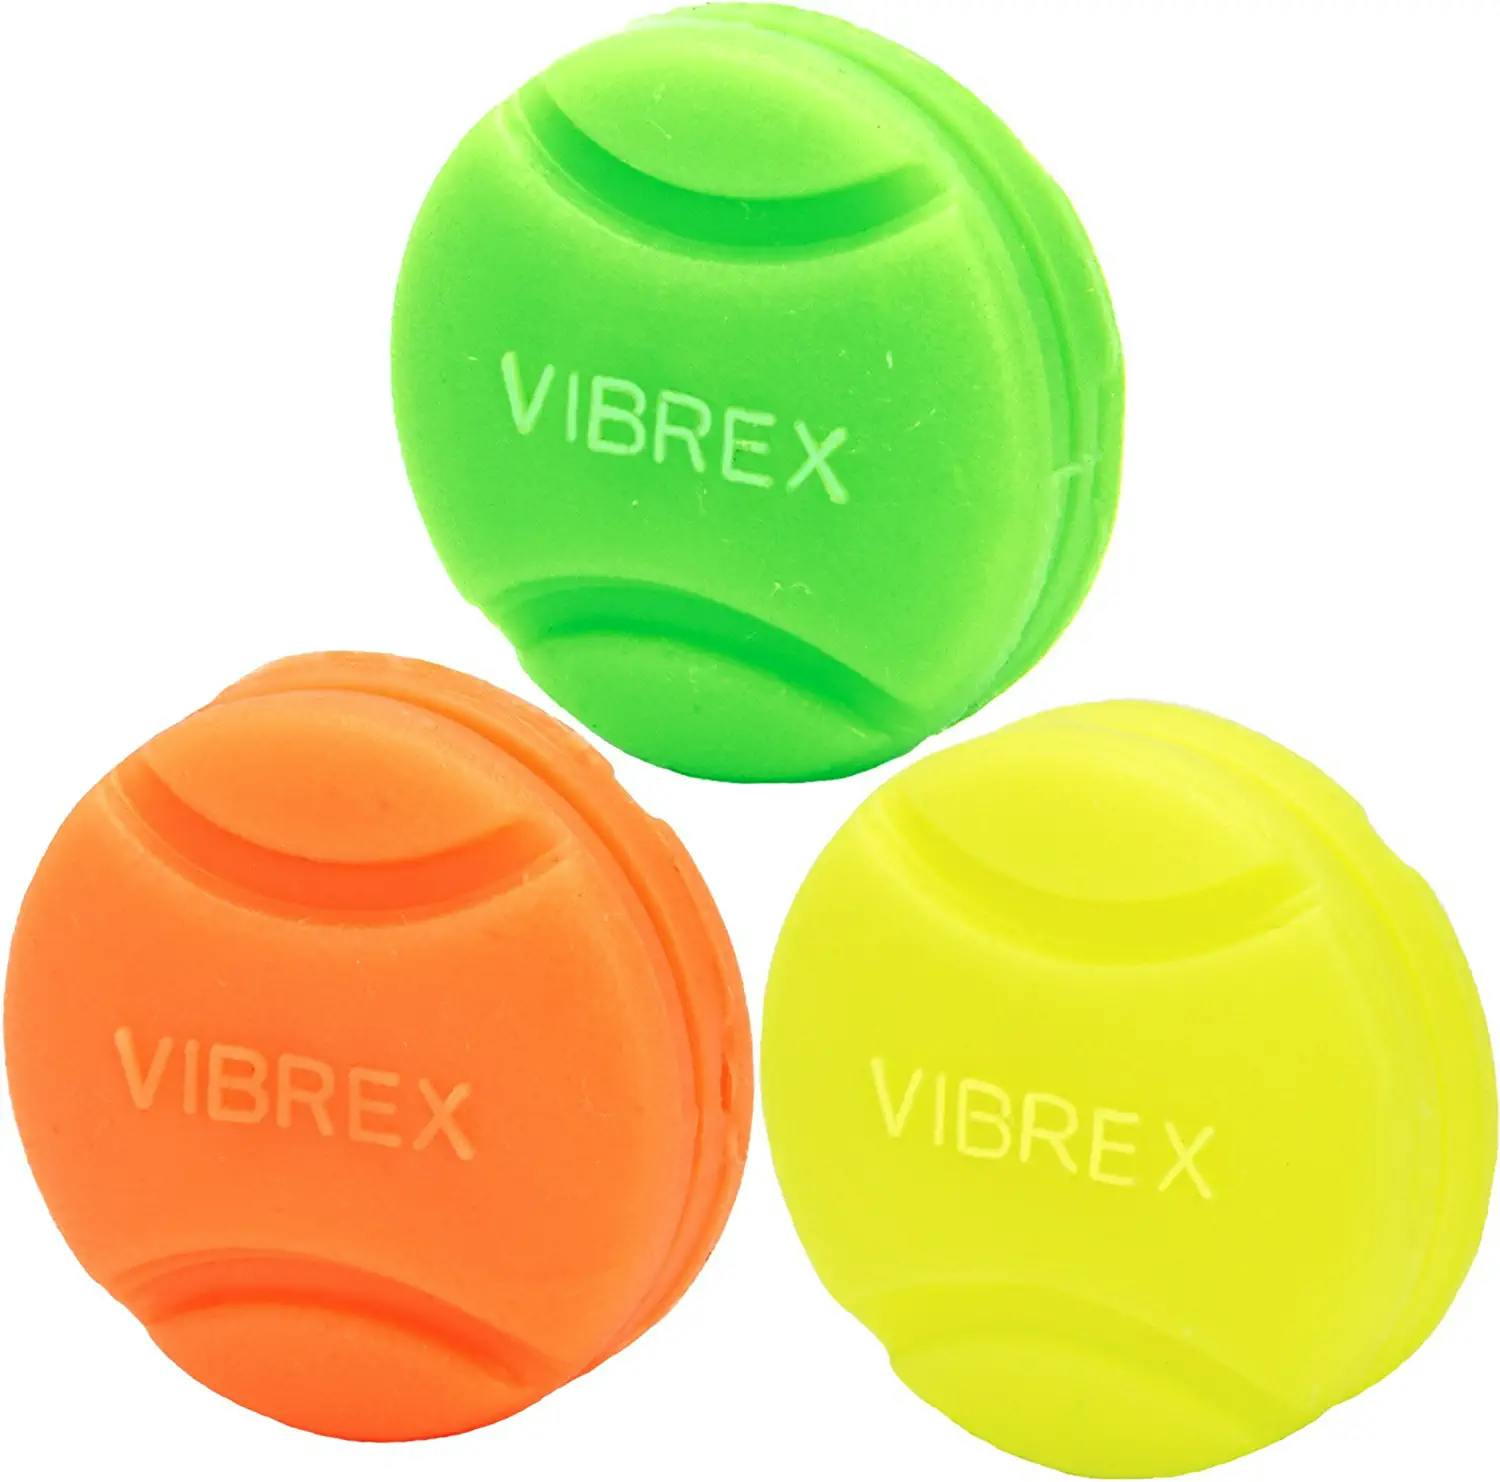 Tourna Vibrex Neon Vibration Dampeners (3x) · Assorted